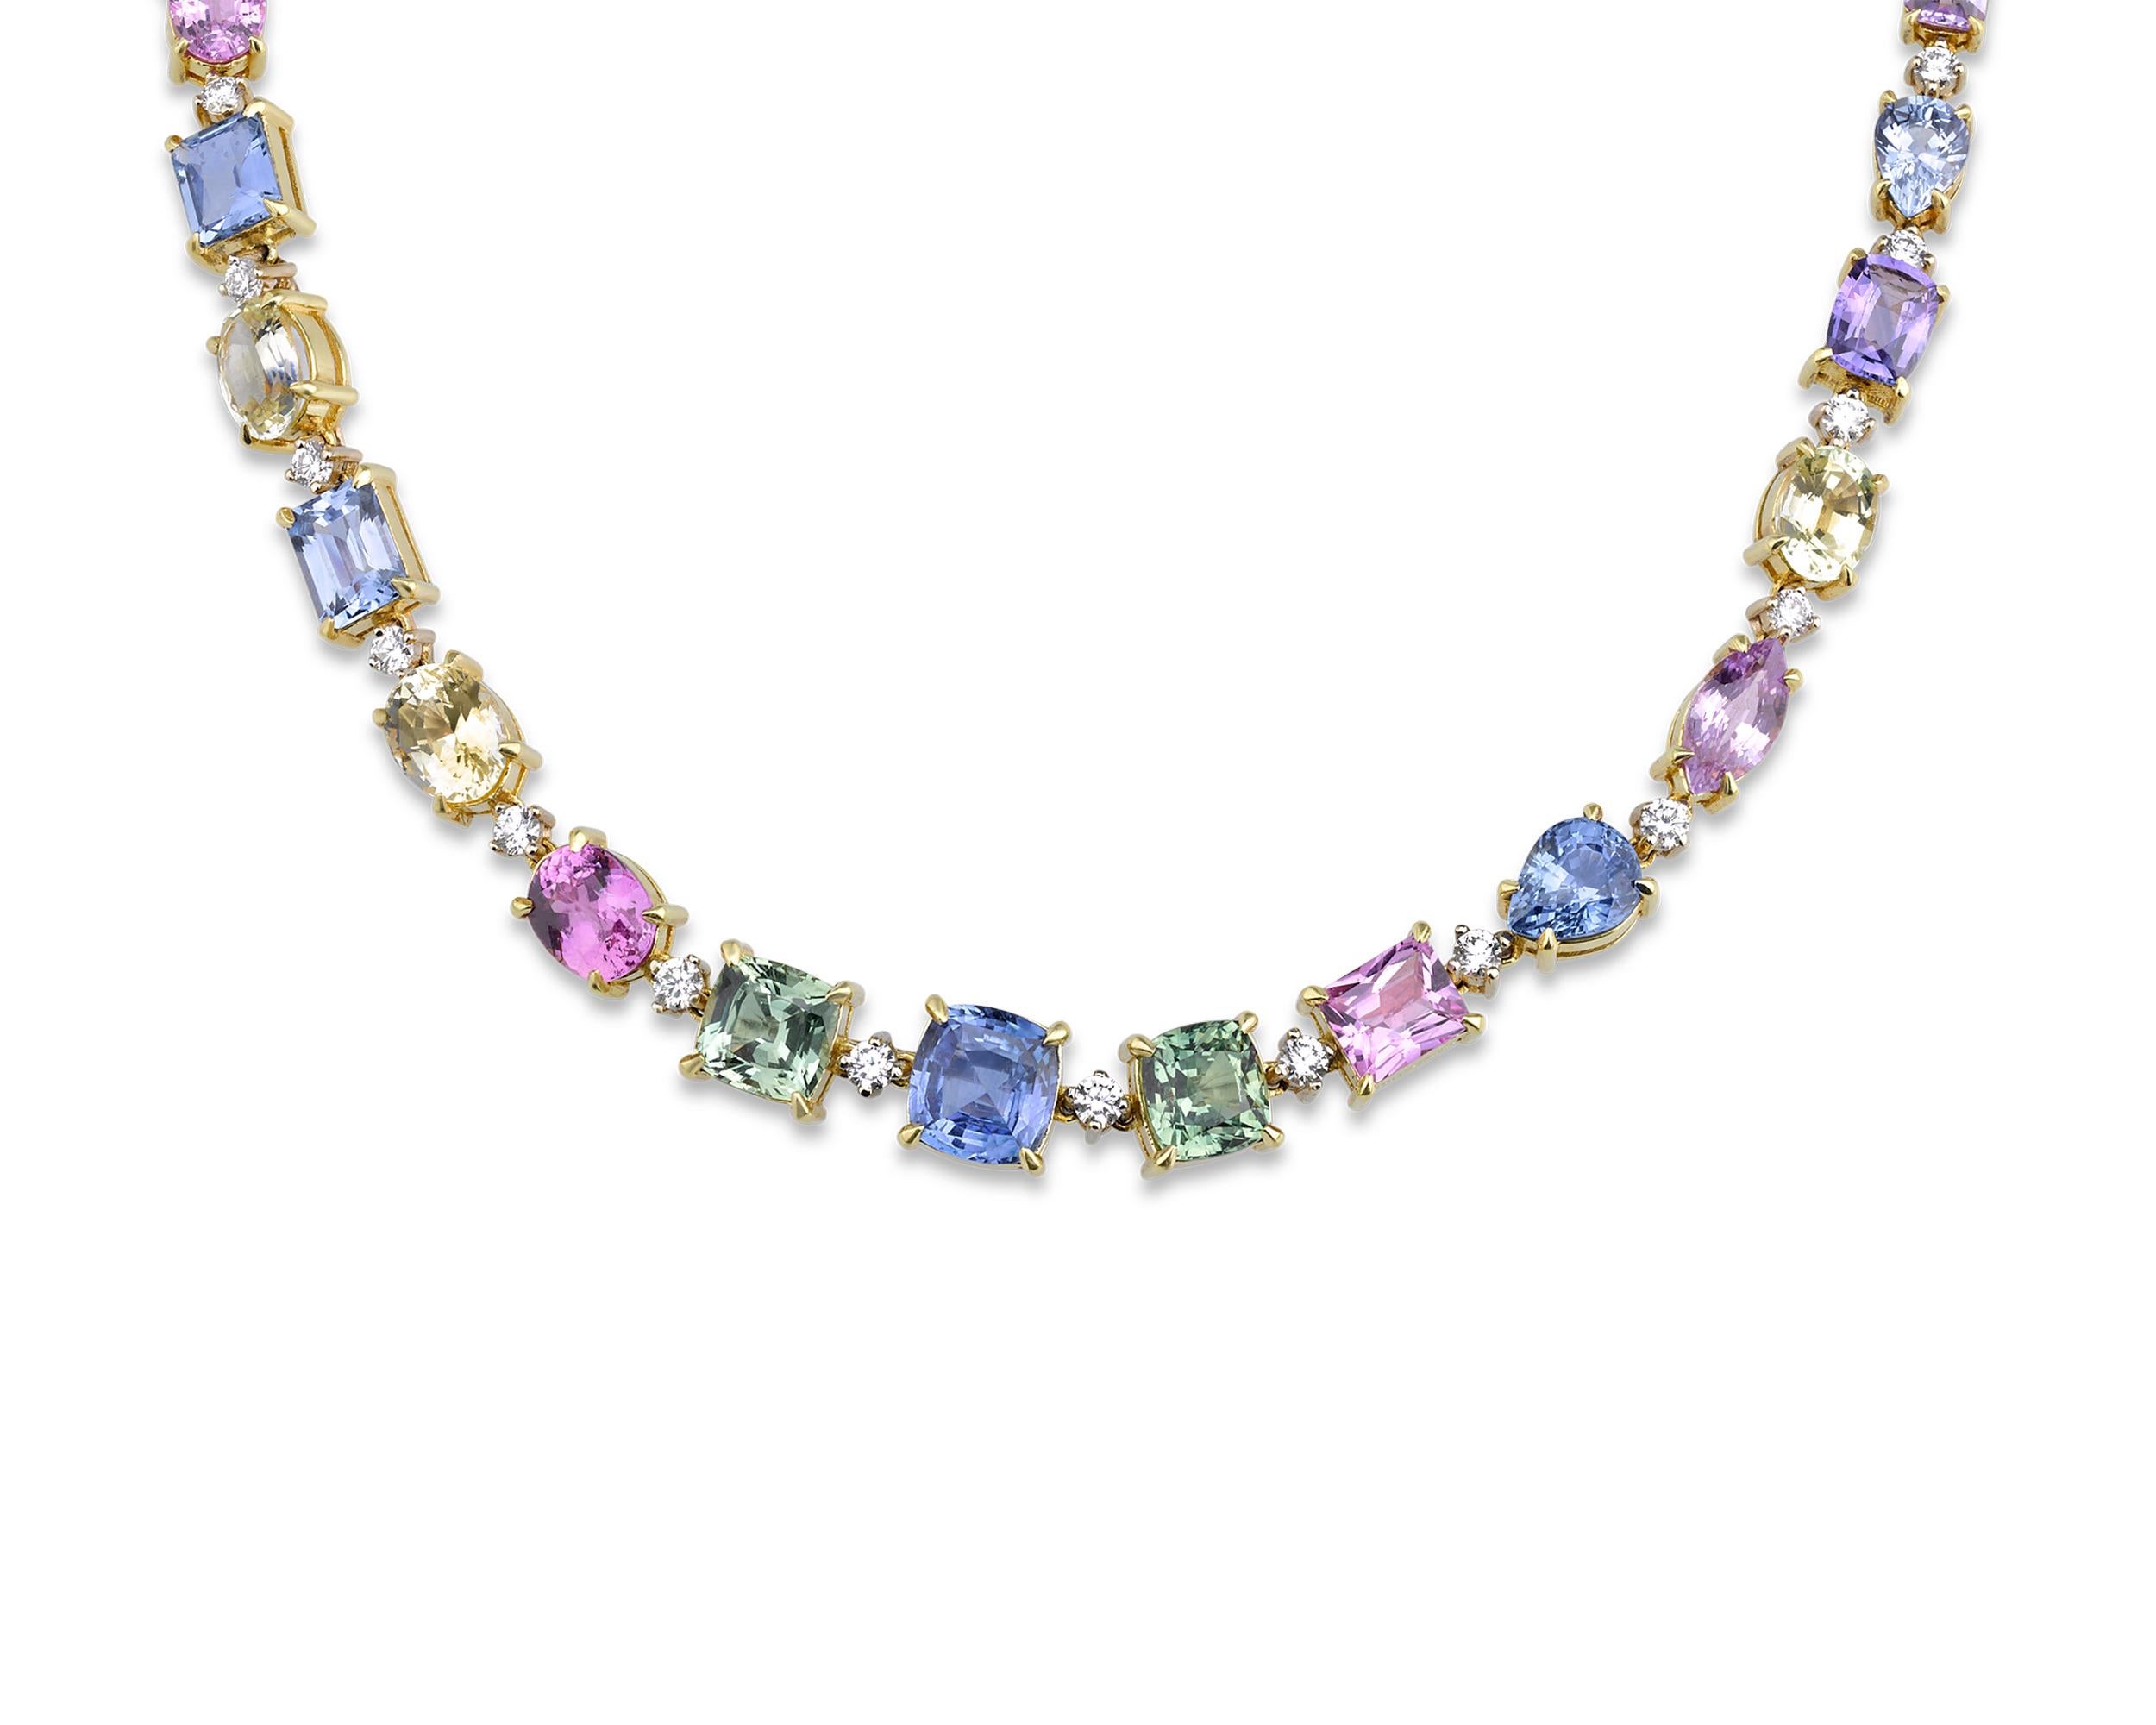 Pear Cut Fancy Colored Sapphire Necklace, 57.39 Carat